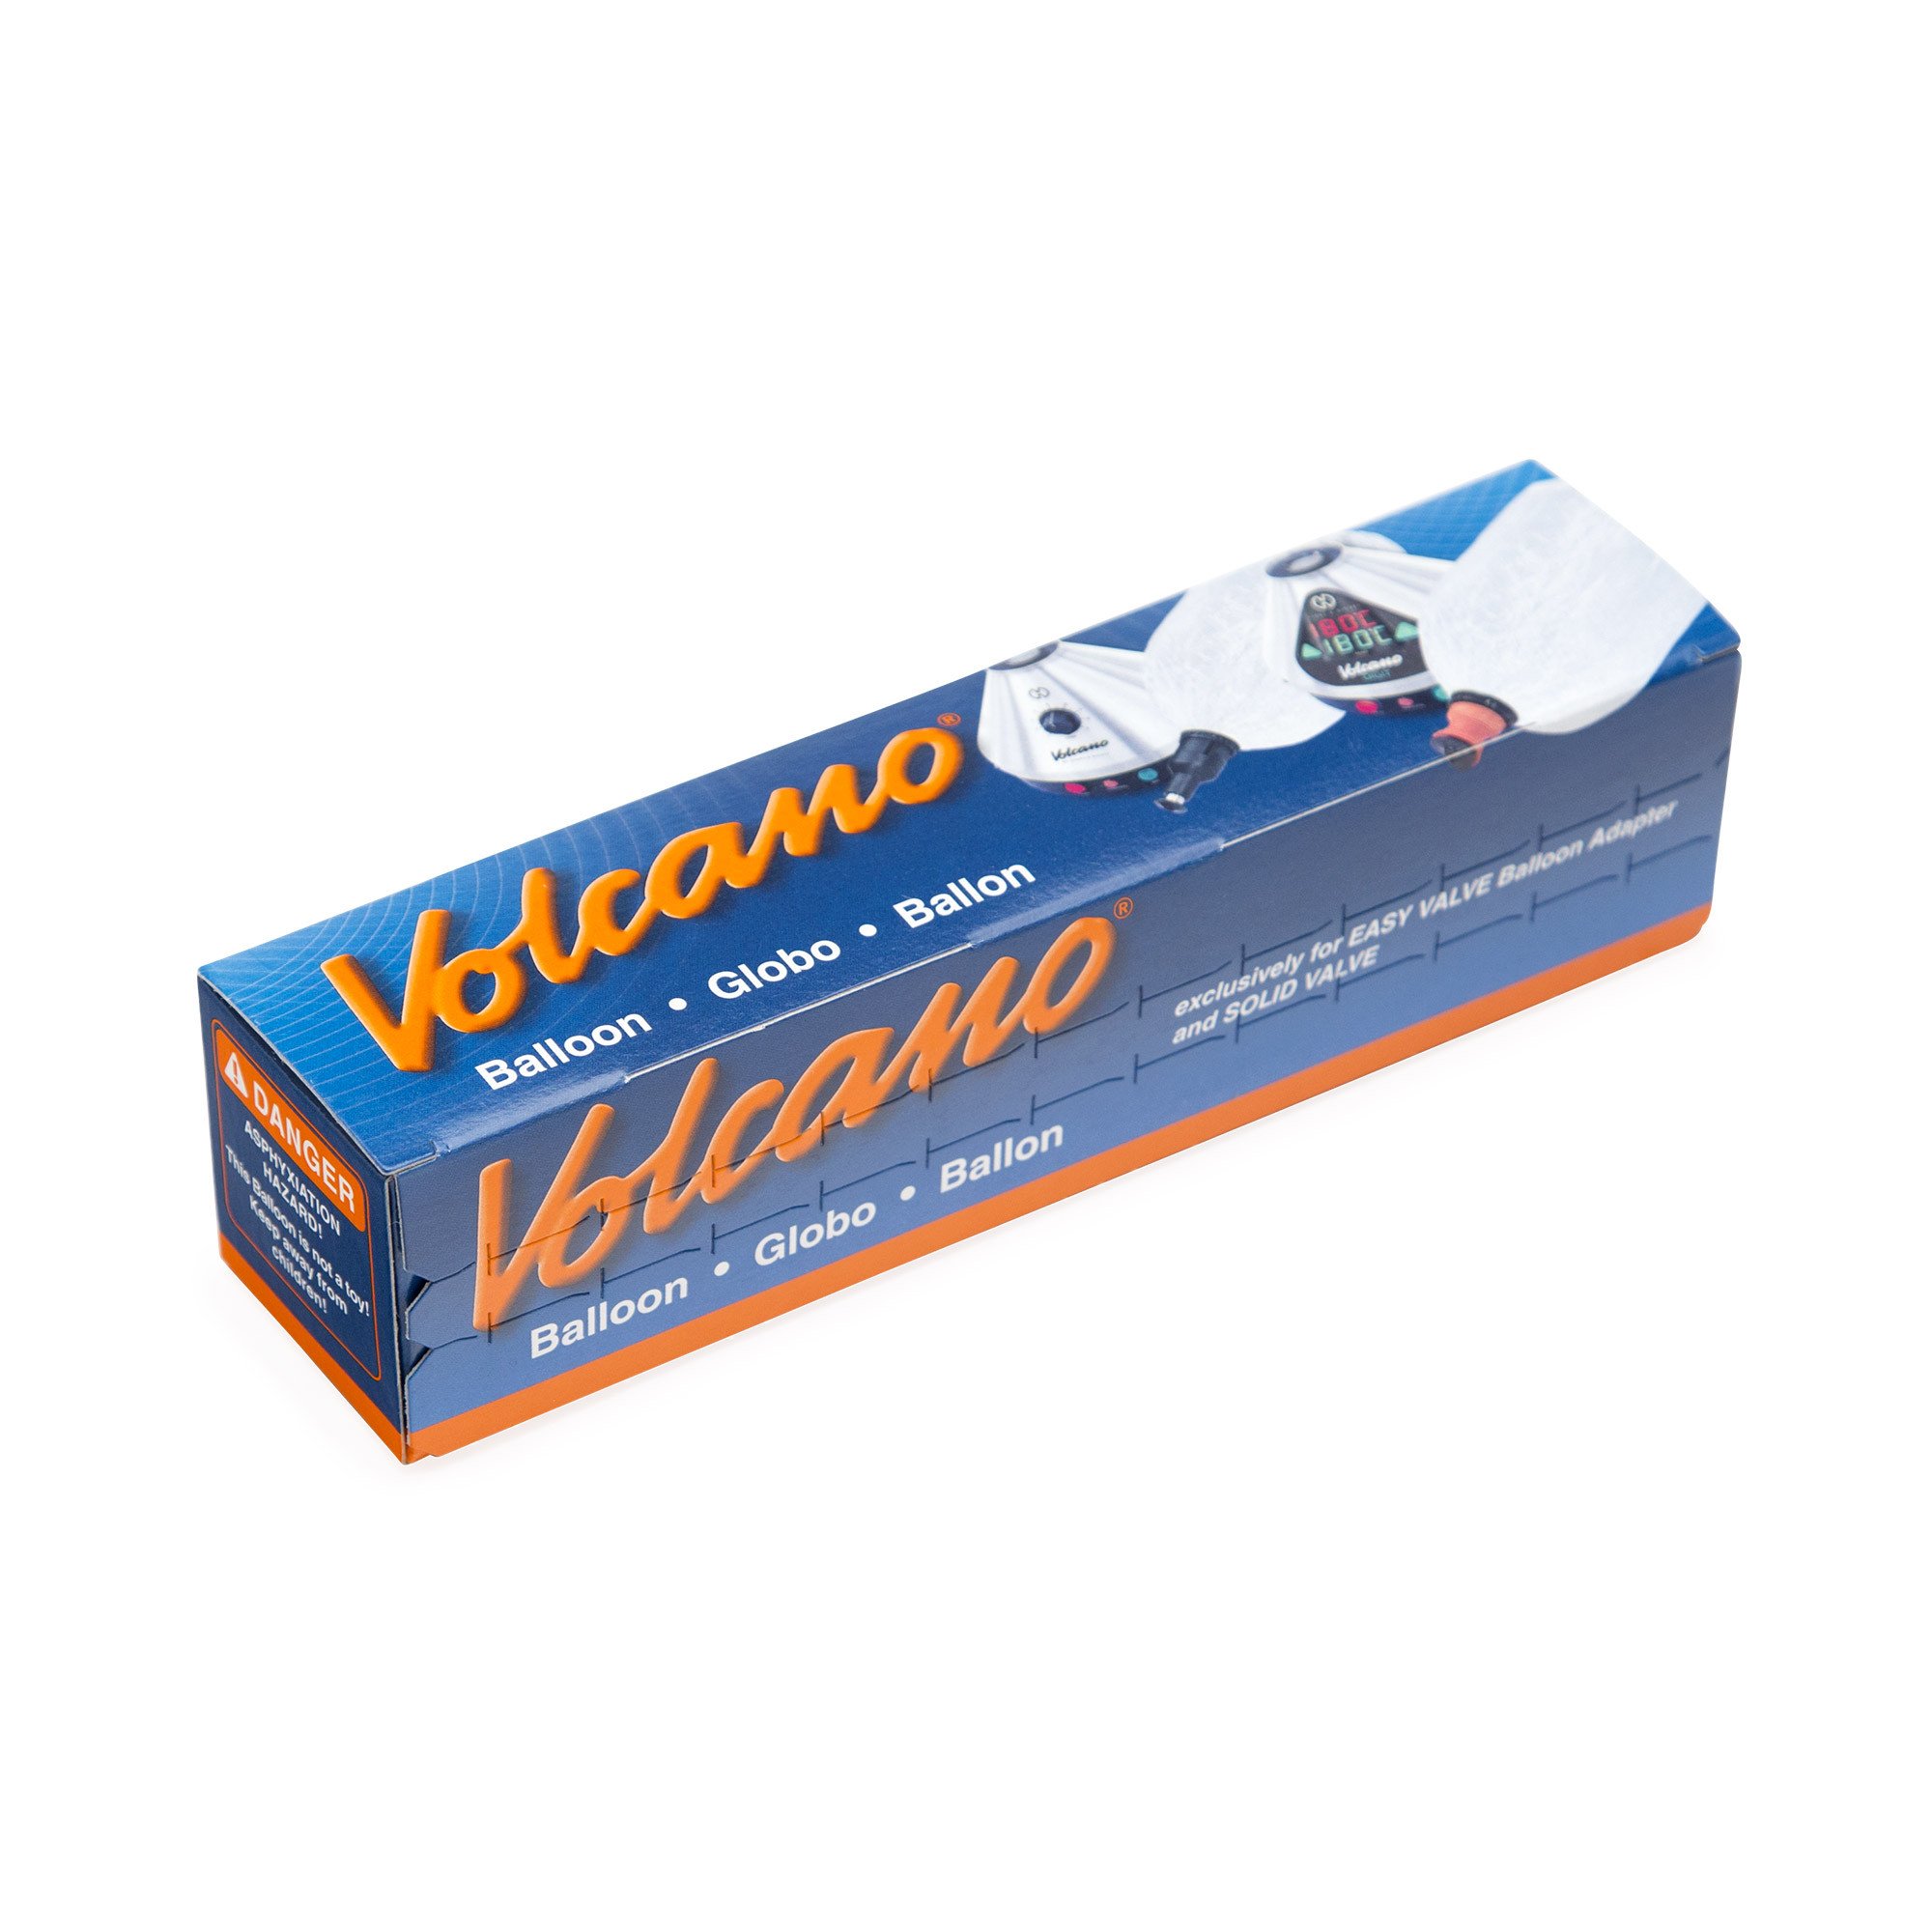 Volcano Vaporizer Solid Valve Balloon Bag (1x10Ft)